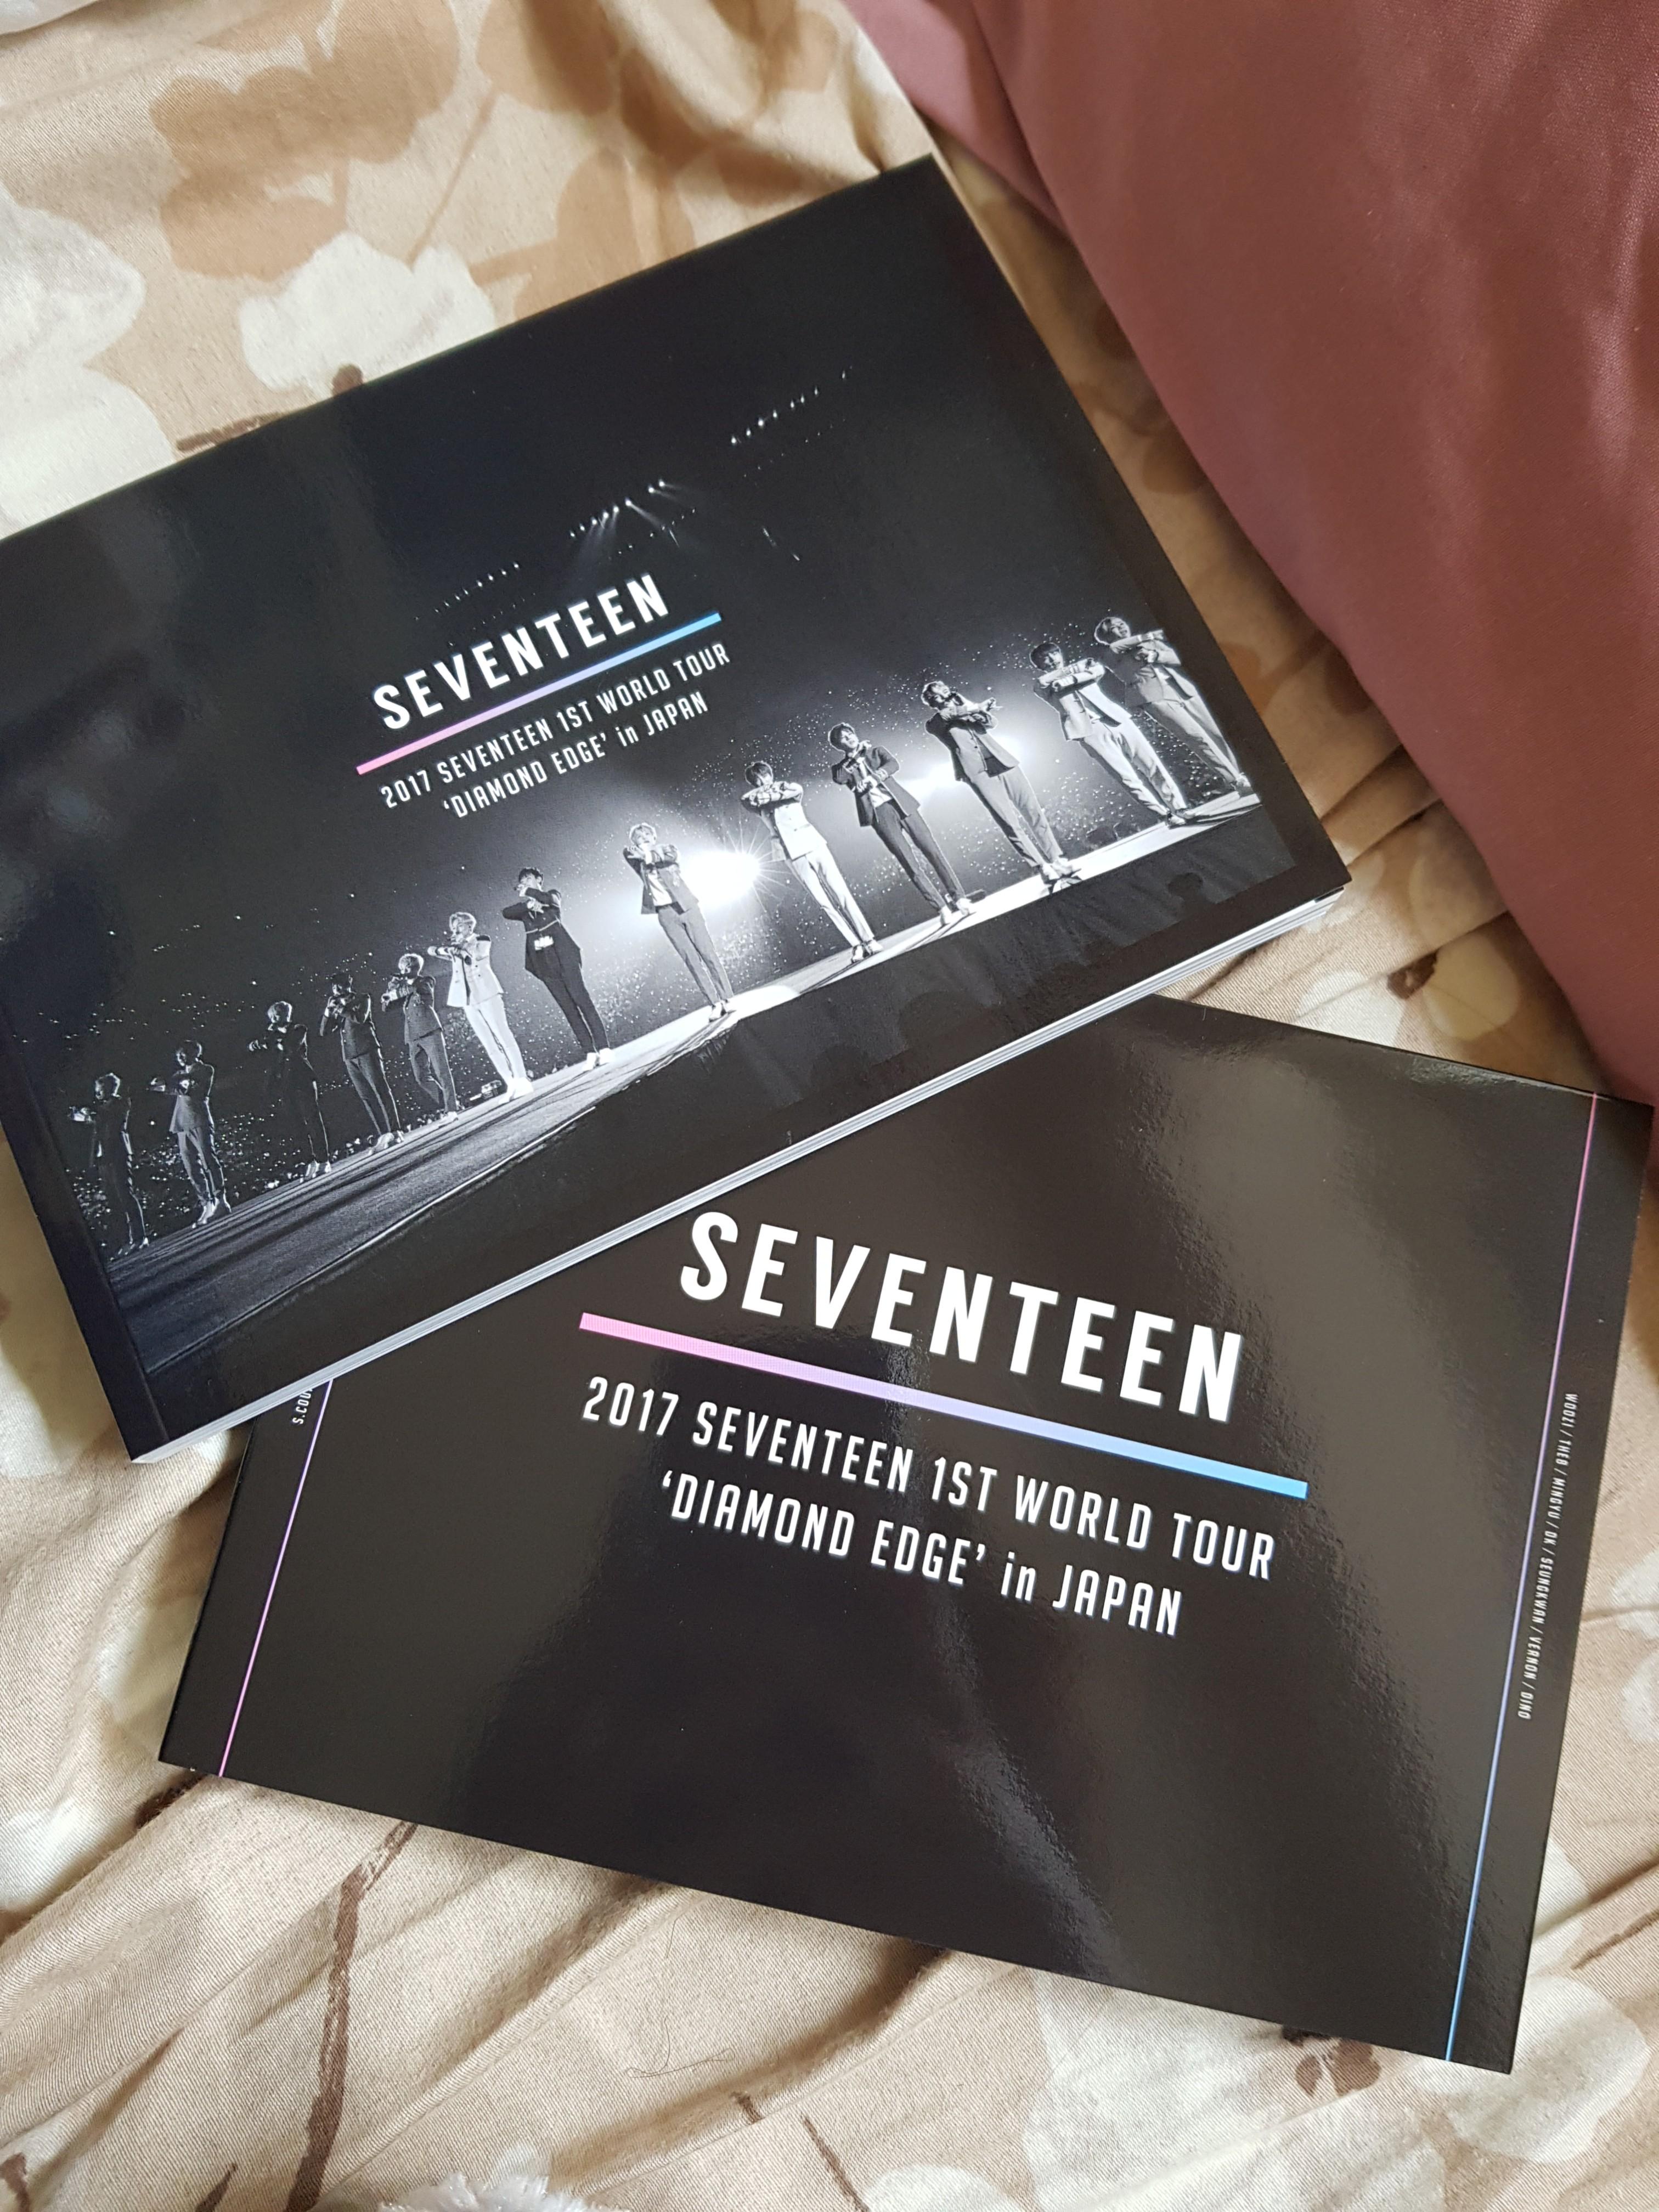 WTS RARE Seventeen Diamond Edge in Japan Concert DVD, Hobbies 